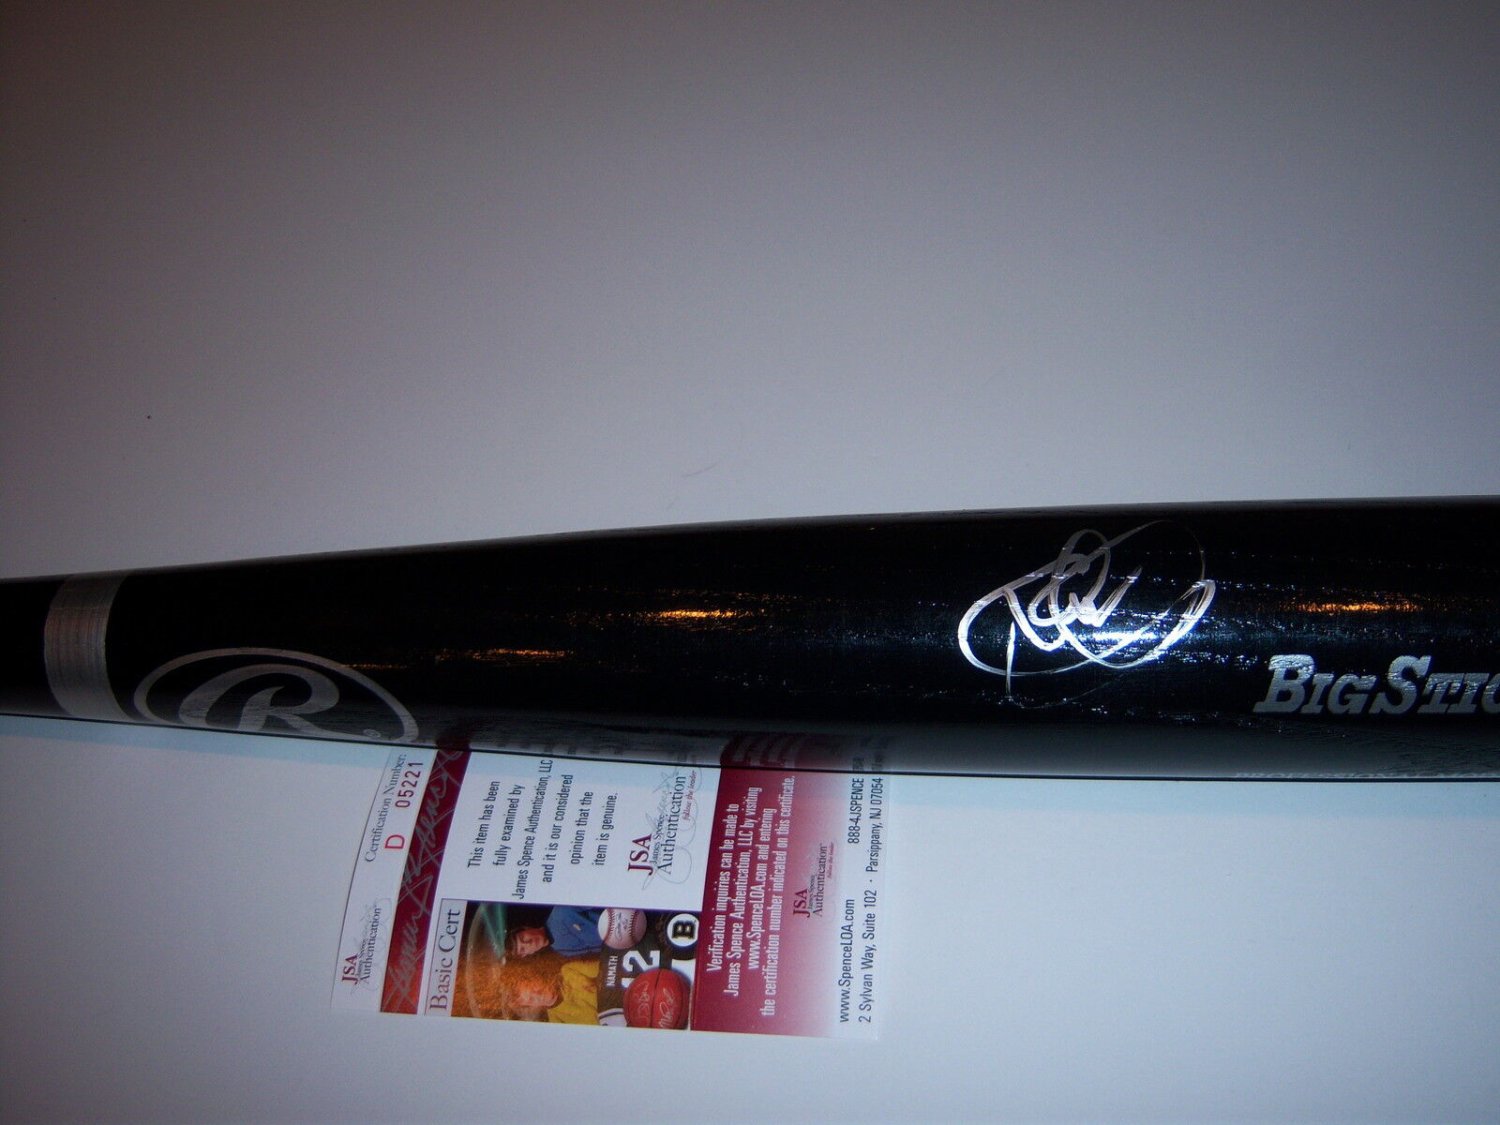 Shawn Green Autographed Signed New York Mets,Toronto Bluejays JSA